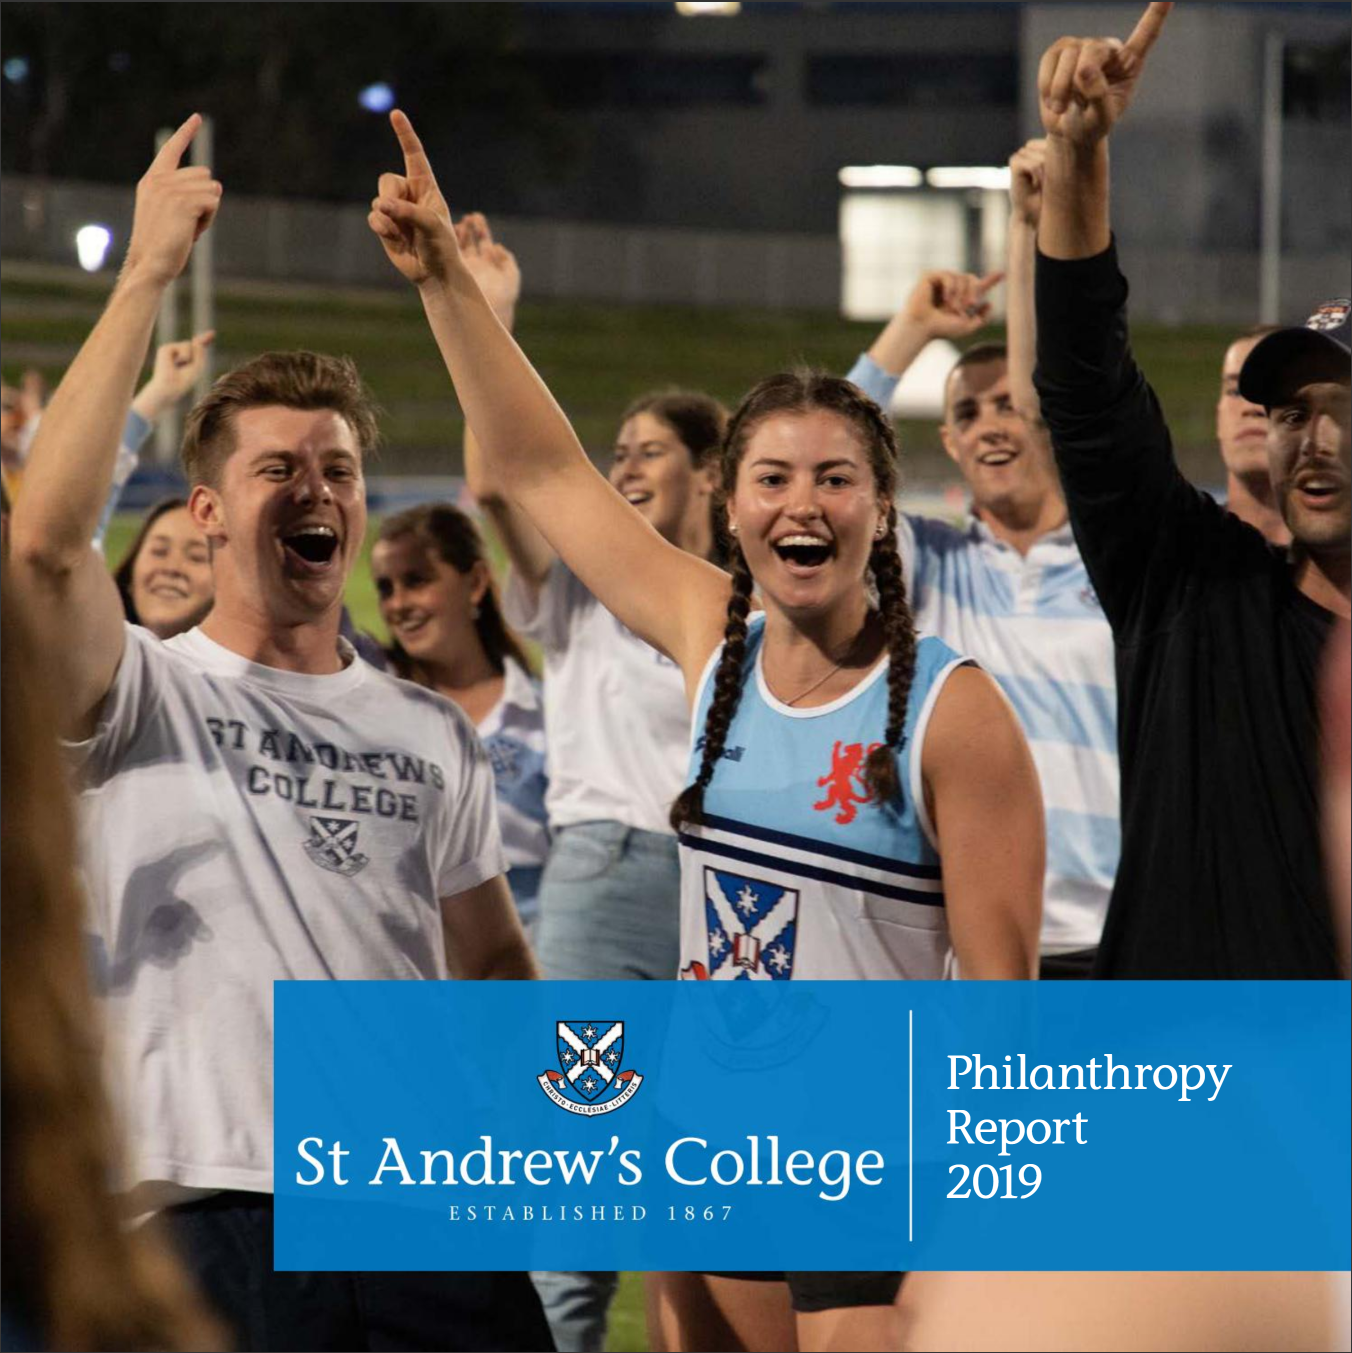 2019 St Andrew's College Philanthropy Report